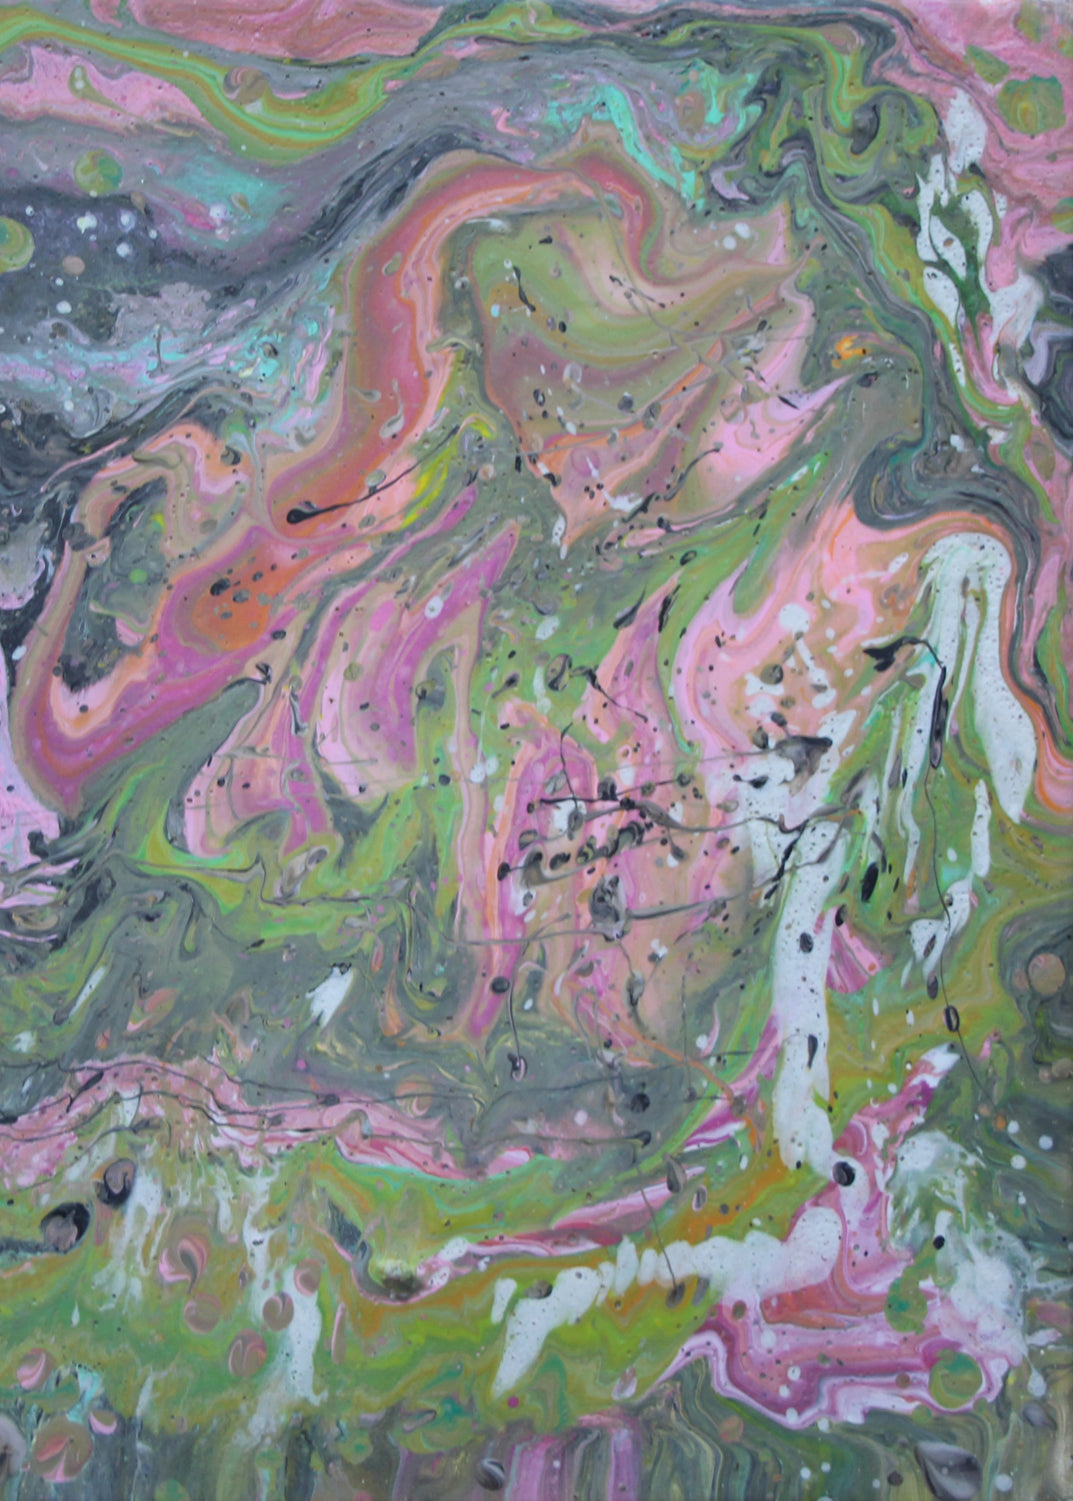 Bubblegum, original fluid painting on canvas, 12x12 inches